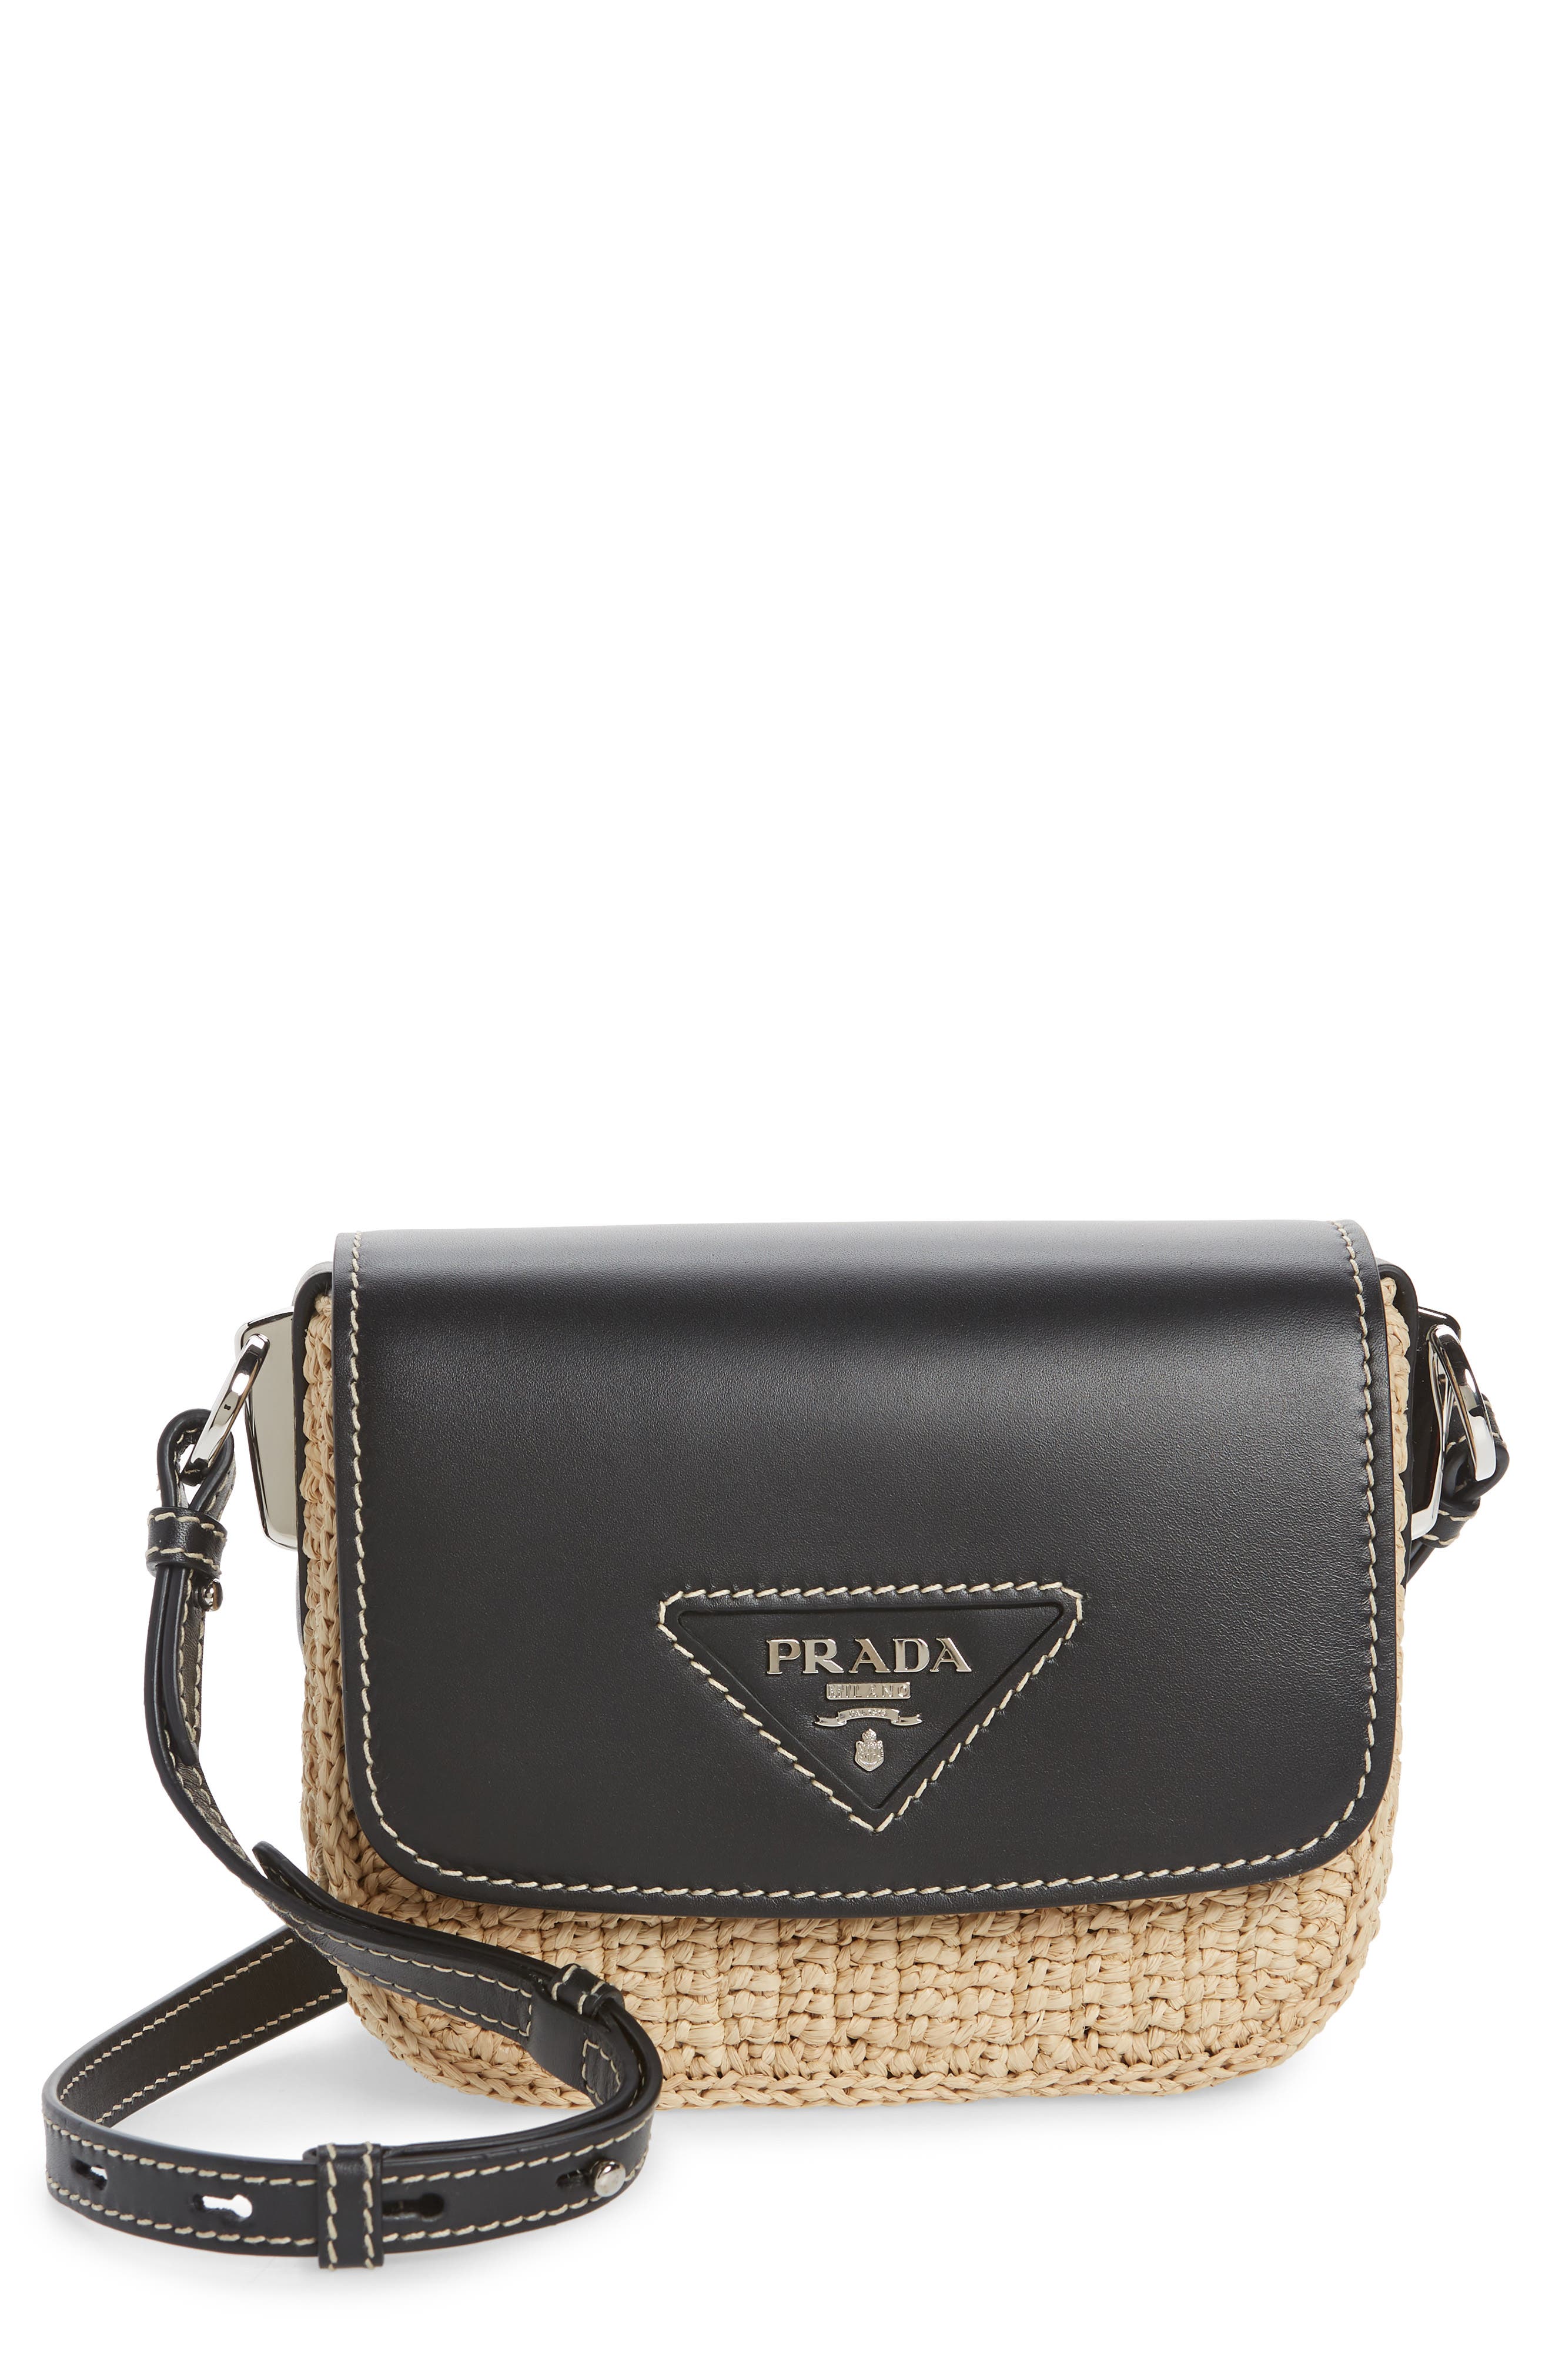 prada leather shoulder bag price